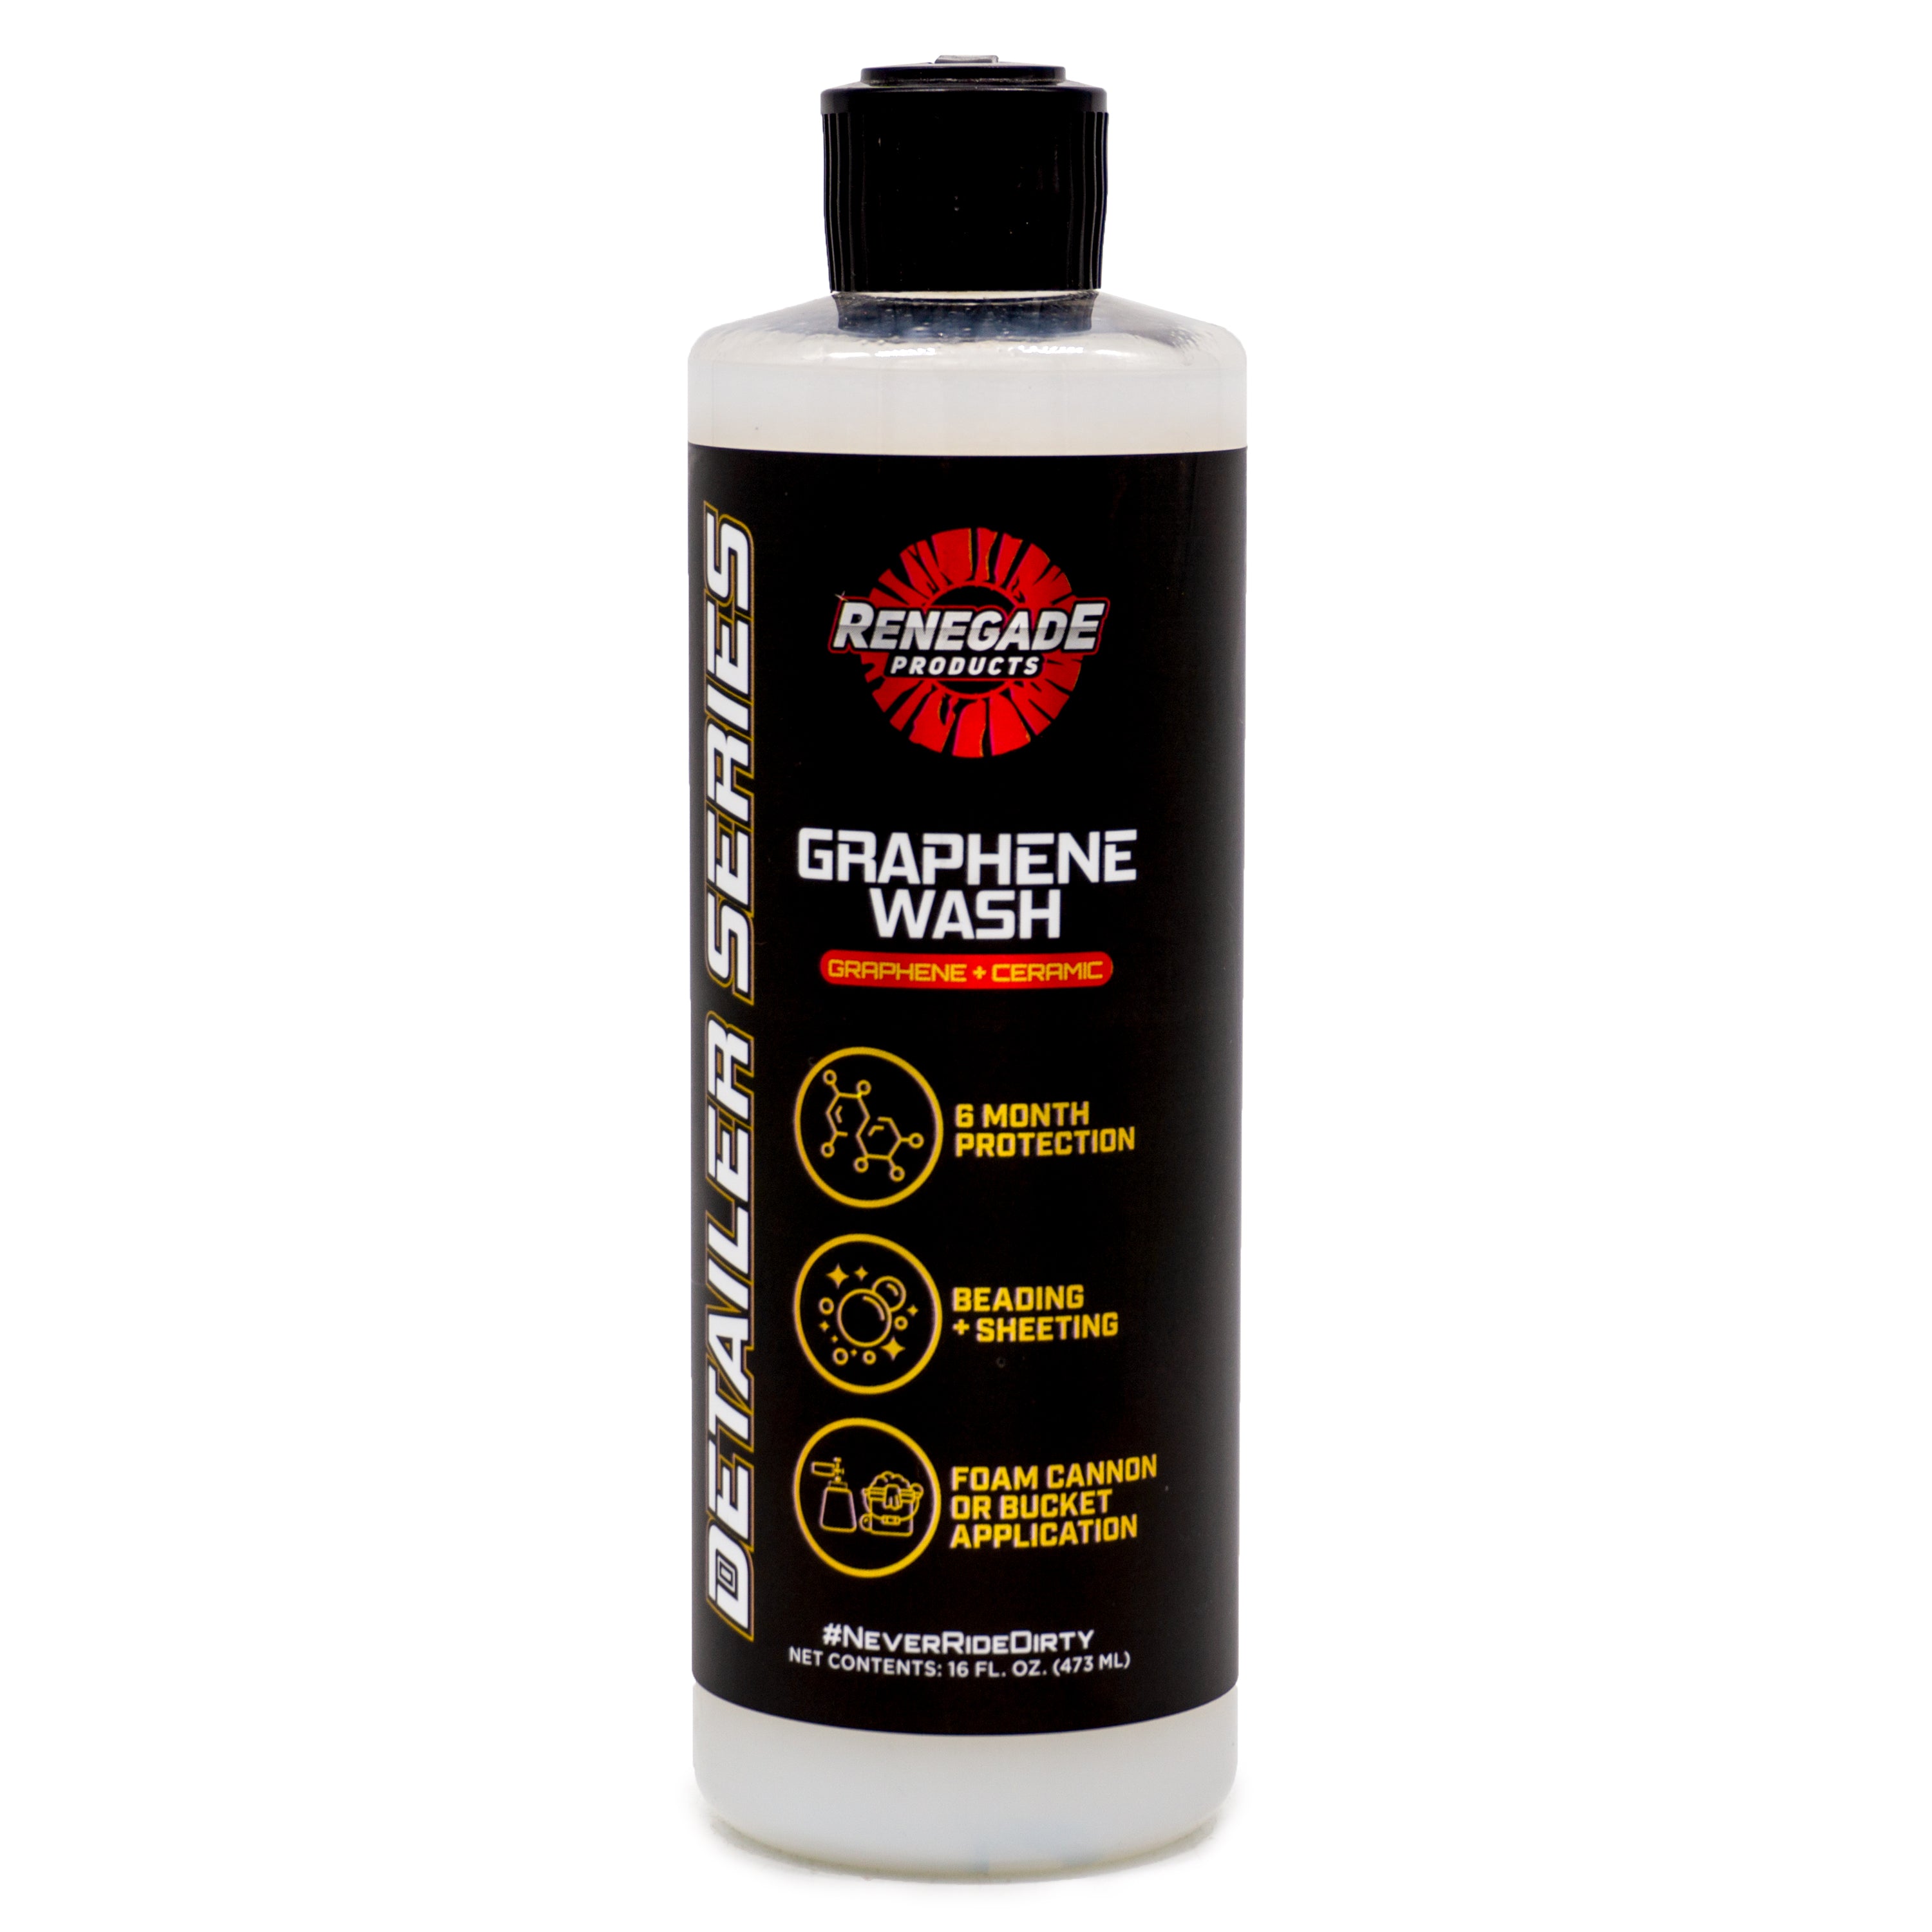 Sud Storm Wash, Wax, & Shampoo - Renegade Products USA